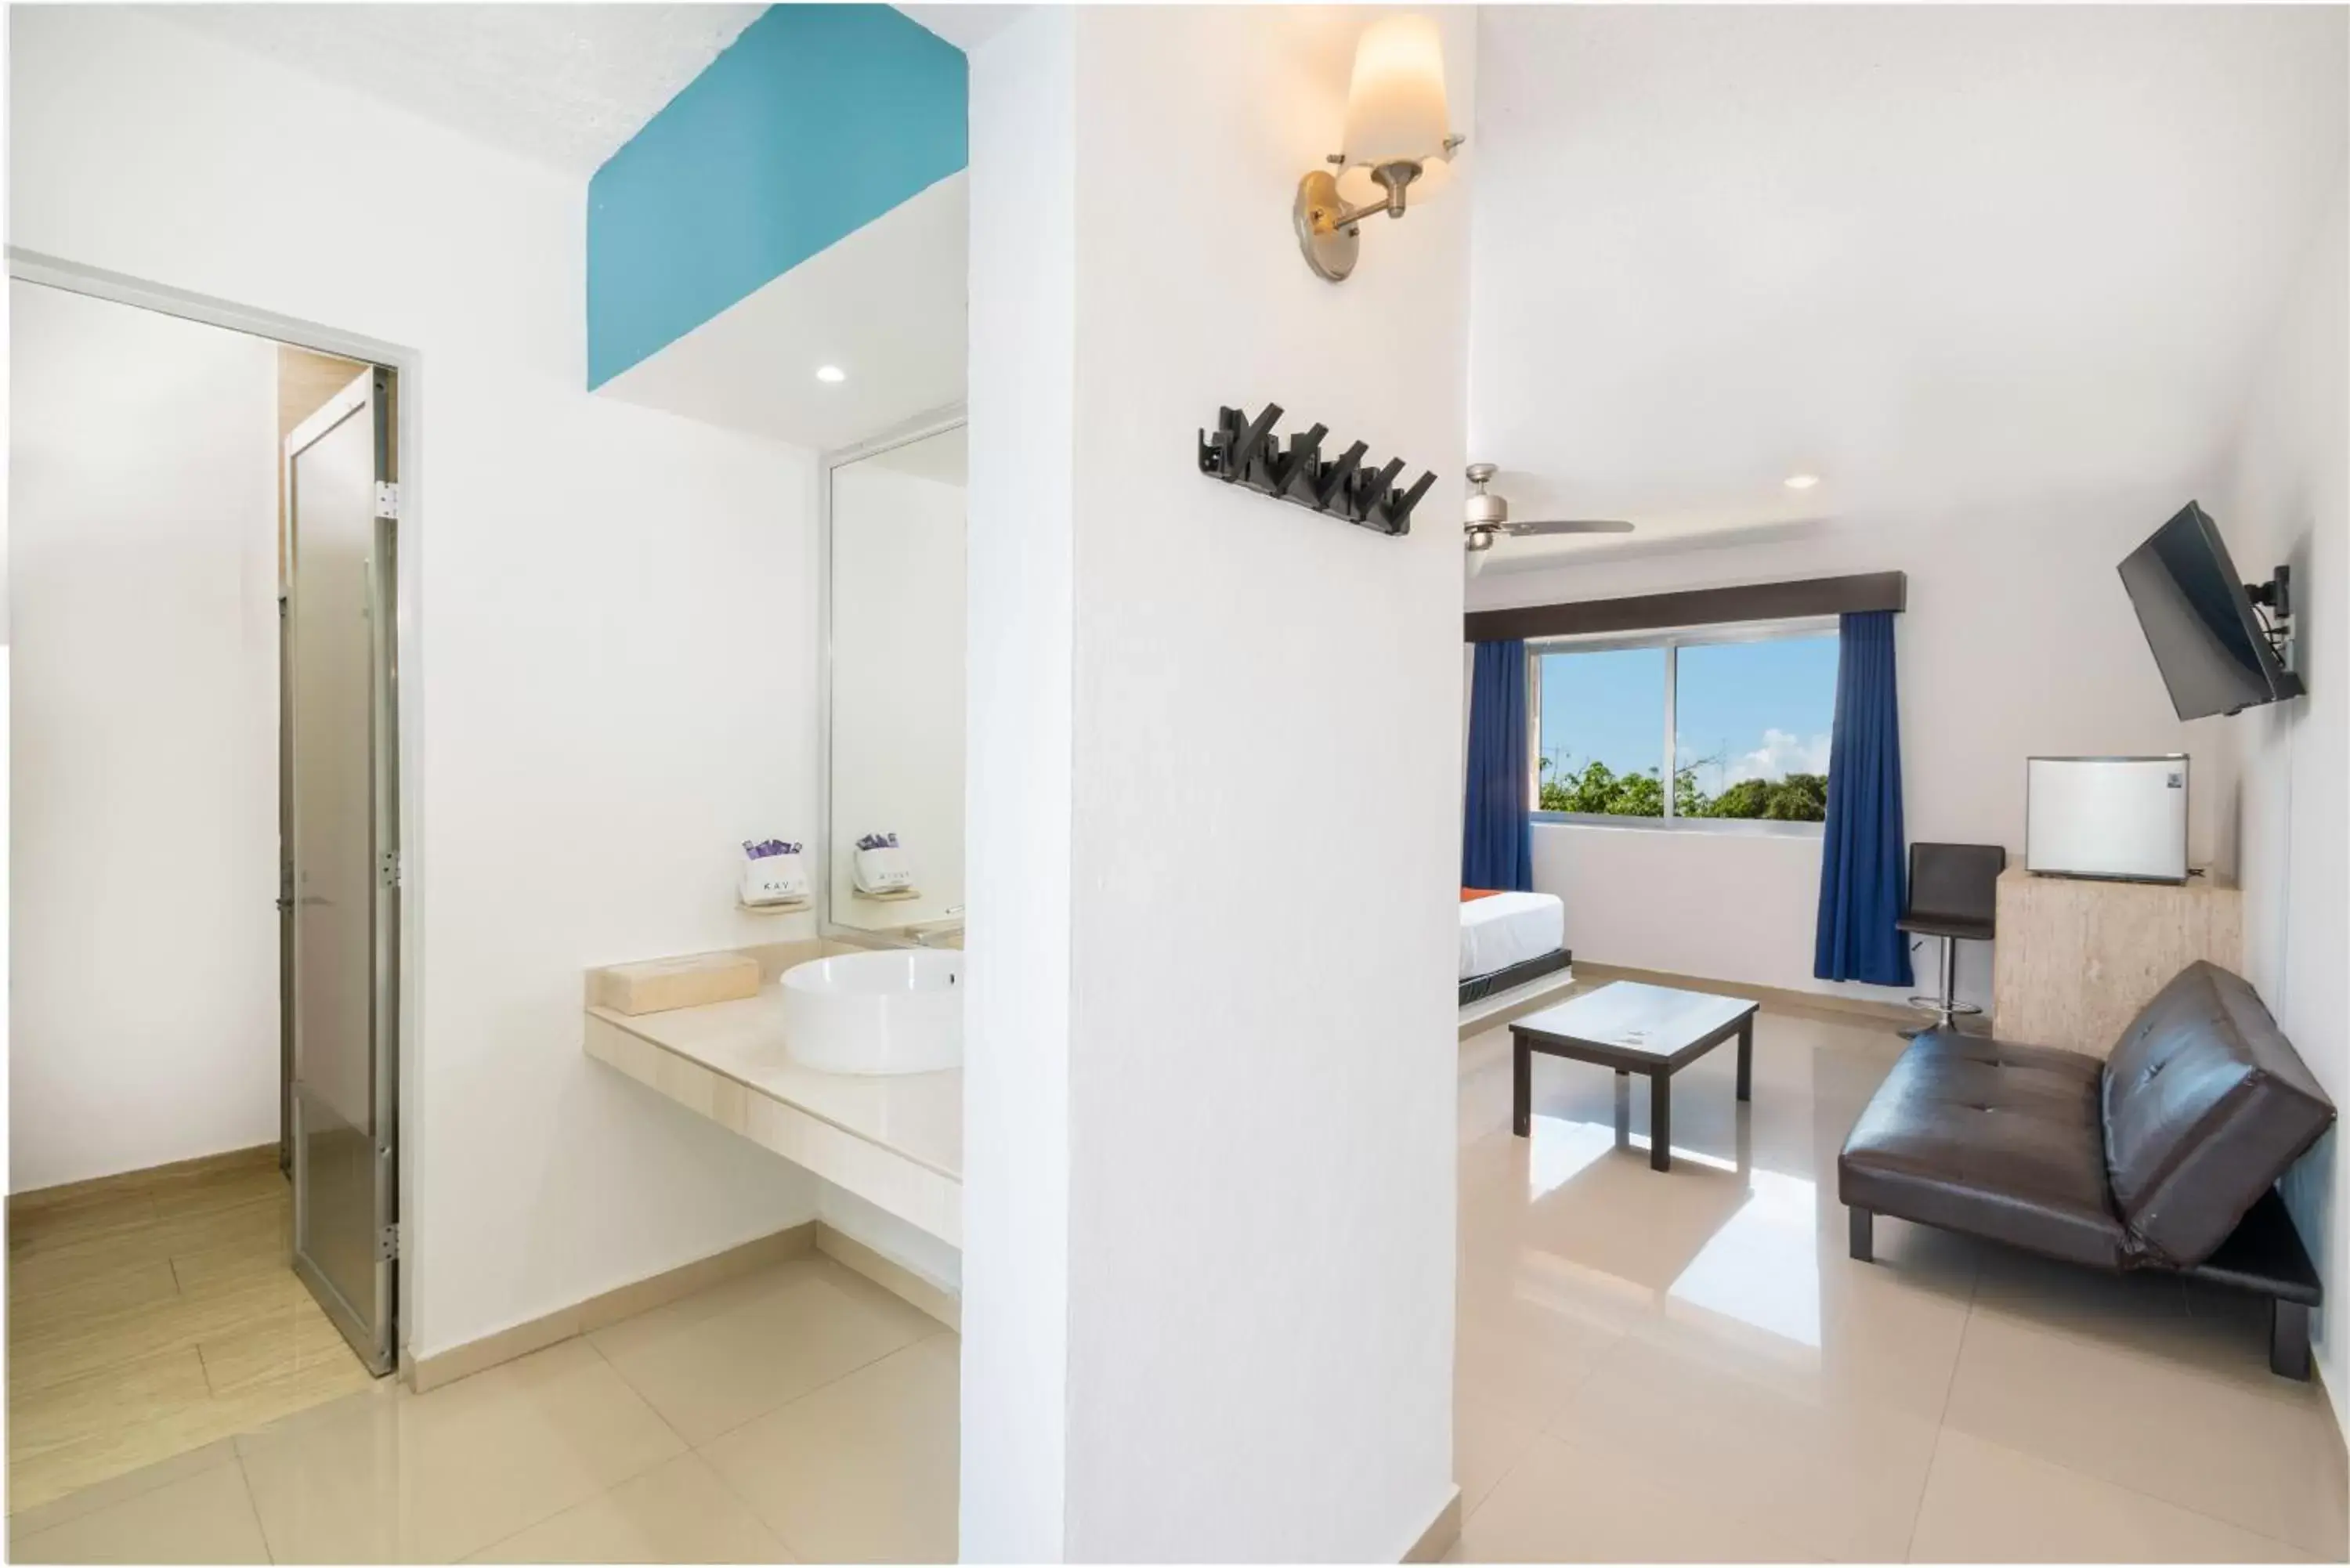 Photo of the whole room, Bathroom in Hotel Playa Encantada